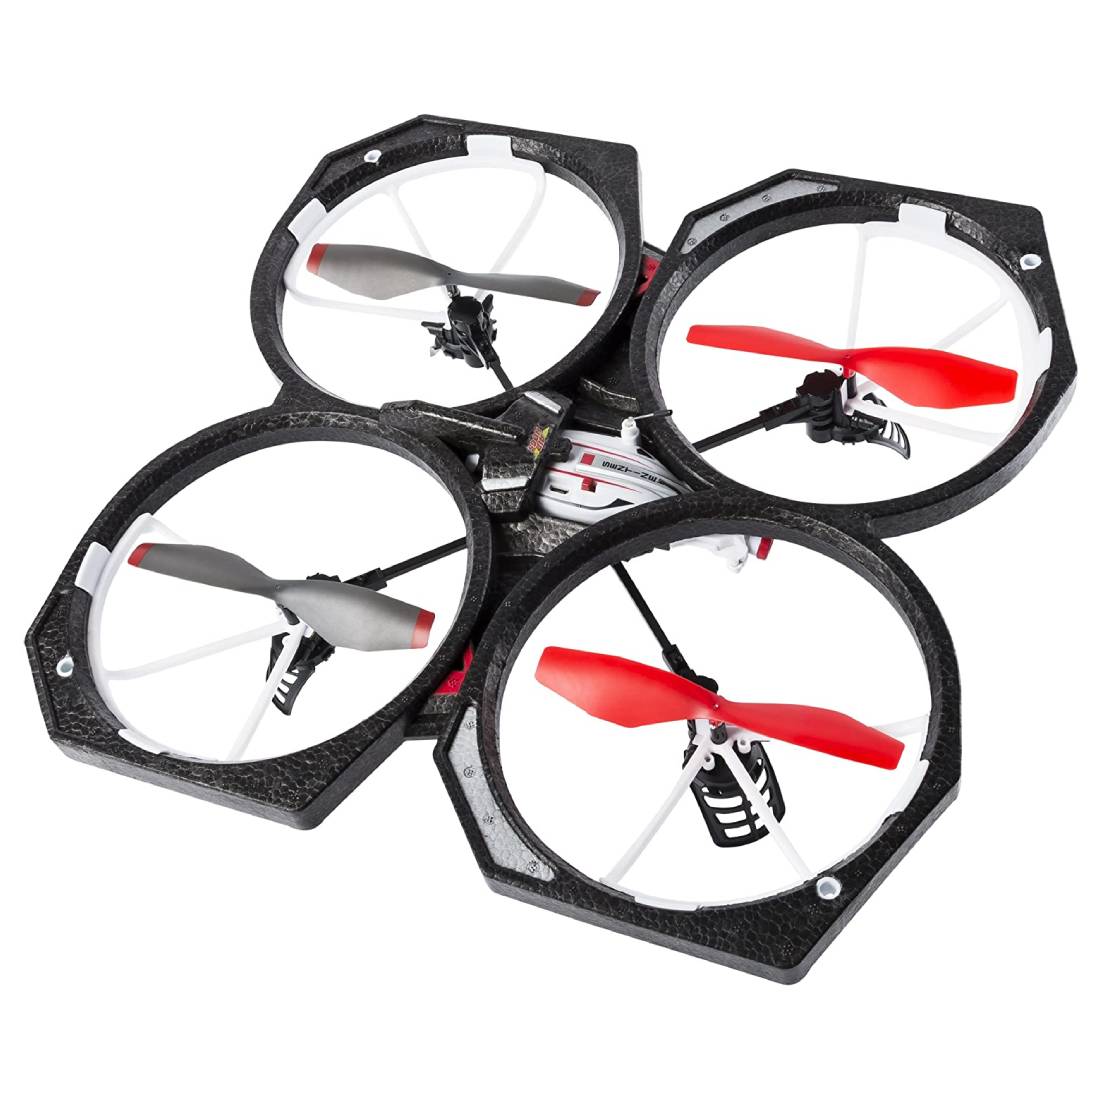 Dron Air Hogs Predator Cámara 720p